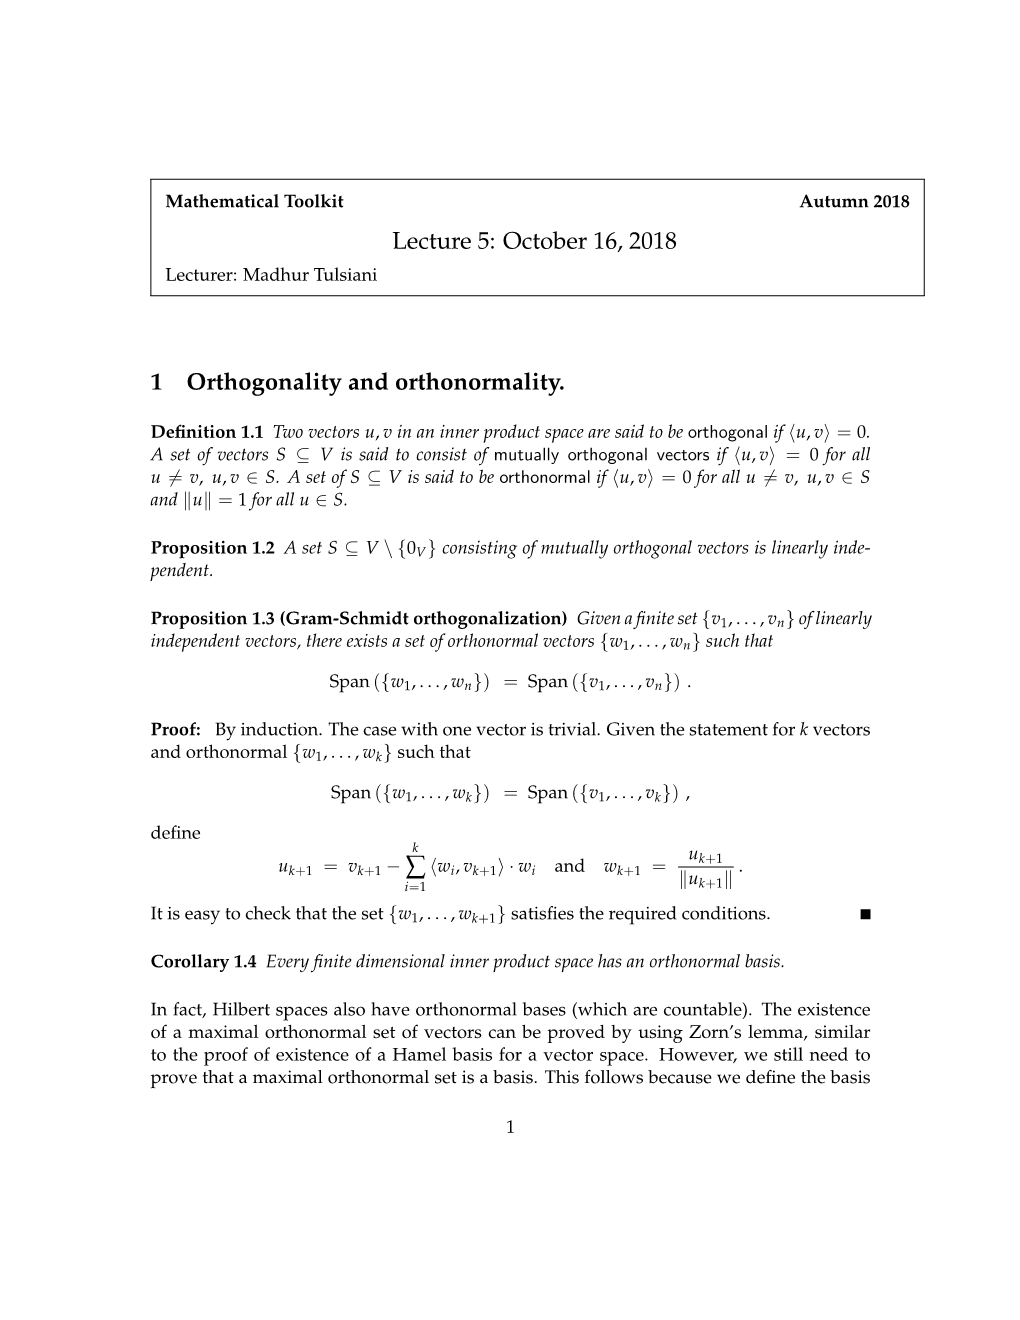 October 16, 2018 1 Orthogonality and Orthonormality